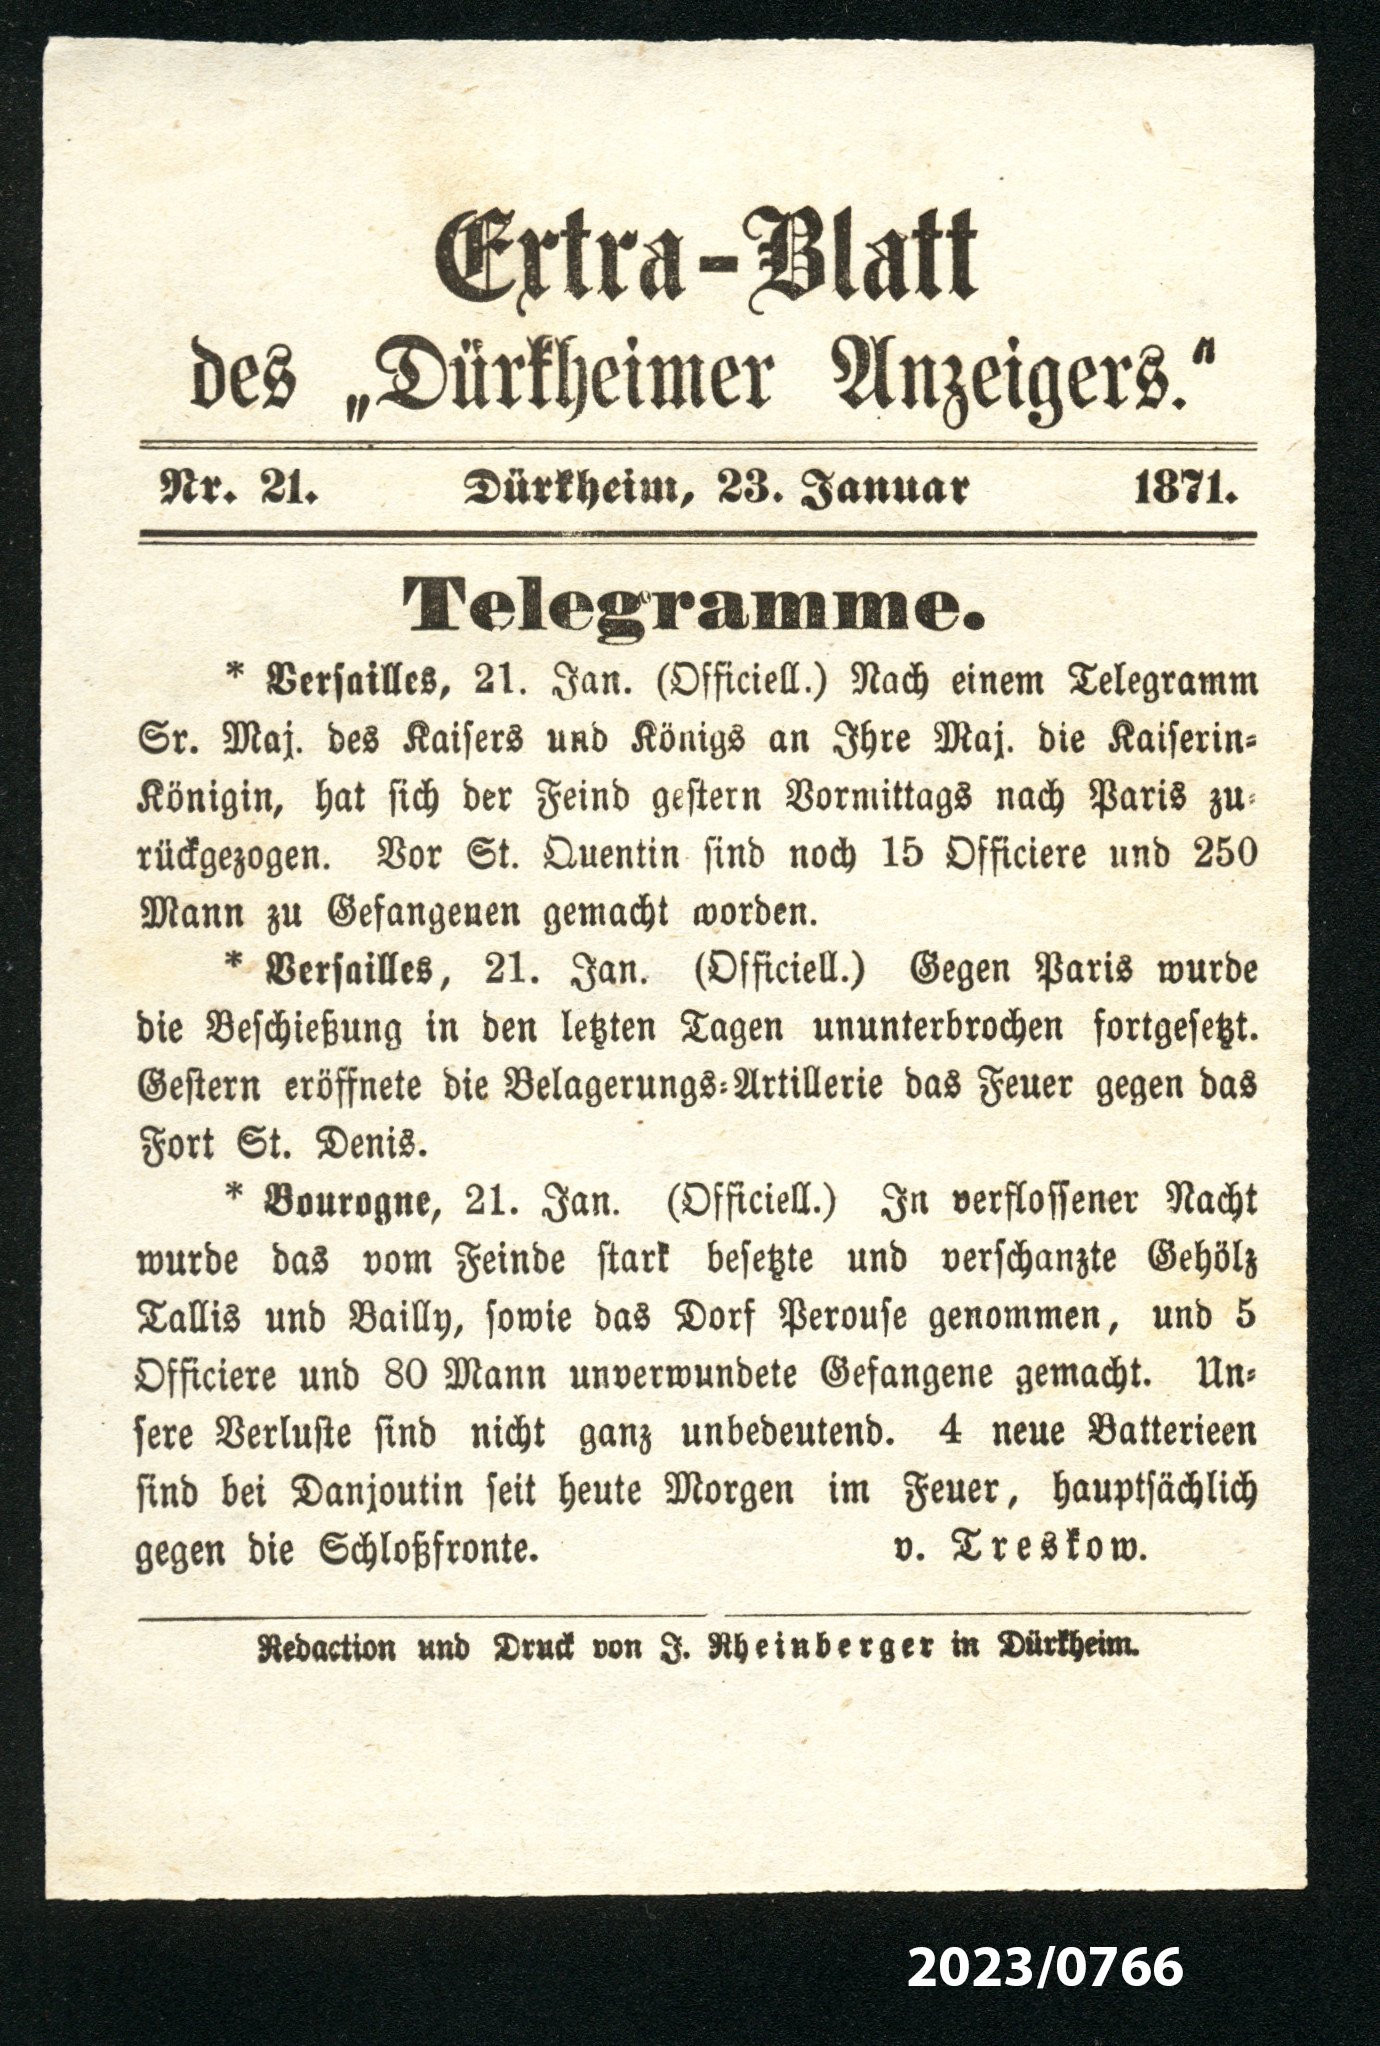 Extra-Blatt des "Dürkheimer Anzeigers." Nr. 21, 23.1.1871 (Stadtmuseum Bad Dürkheim im Kulturzentrum Haus Catoir CC BY-NC-SA)